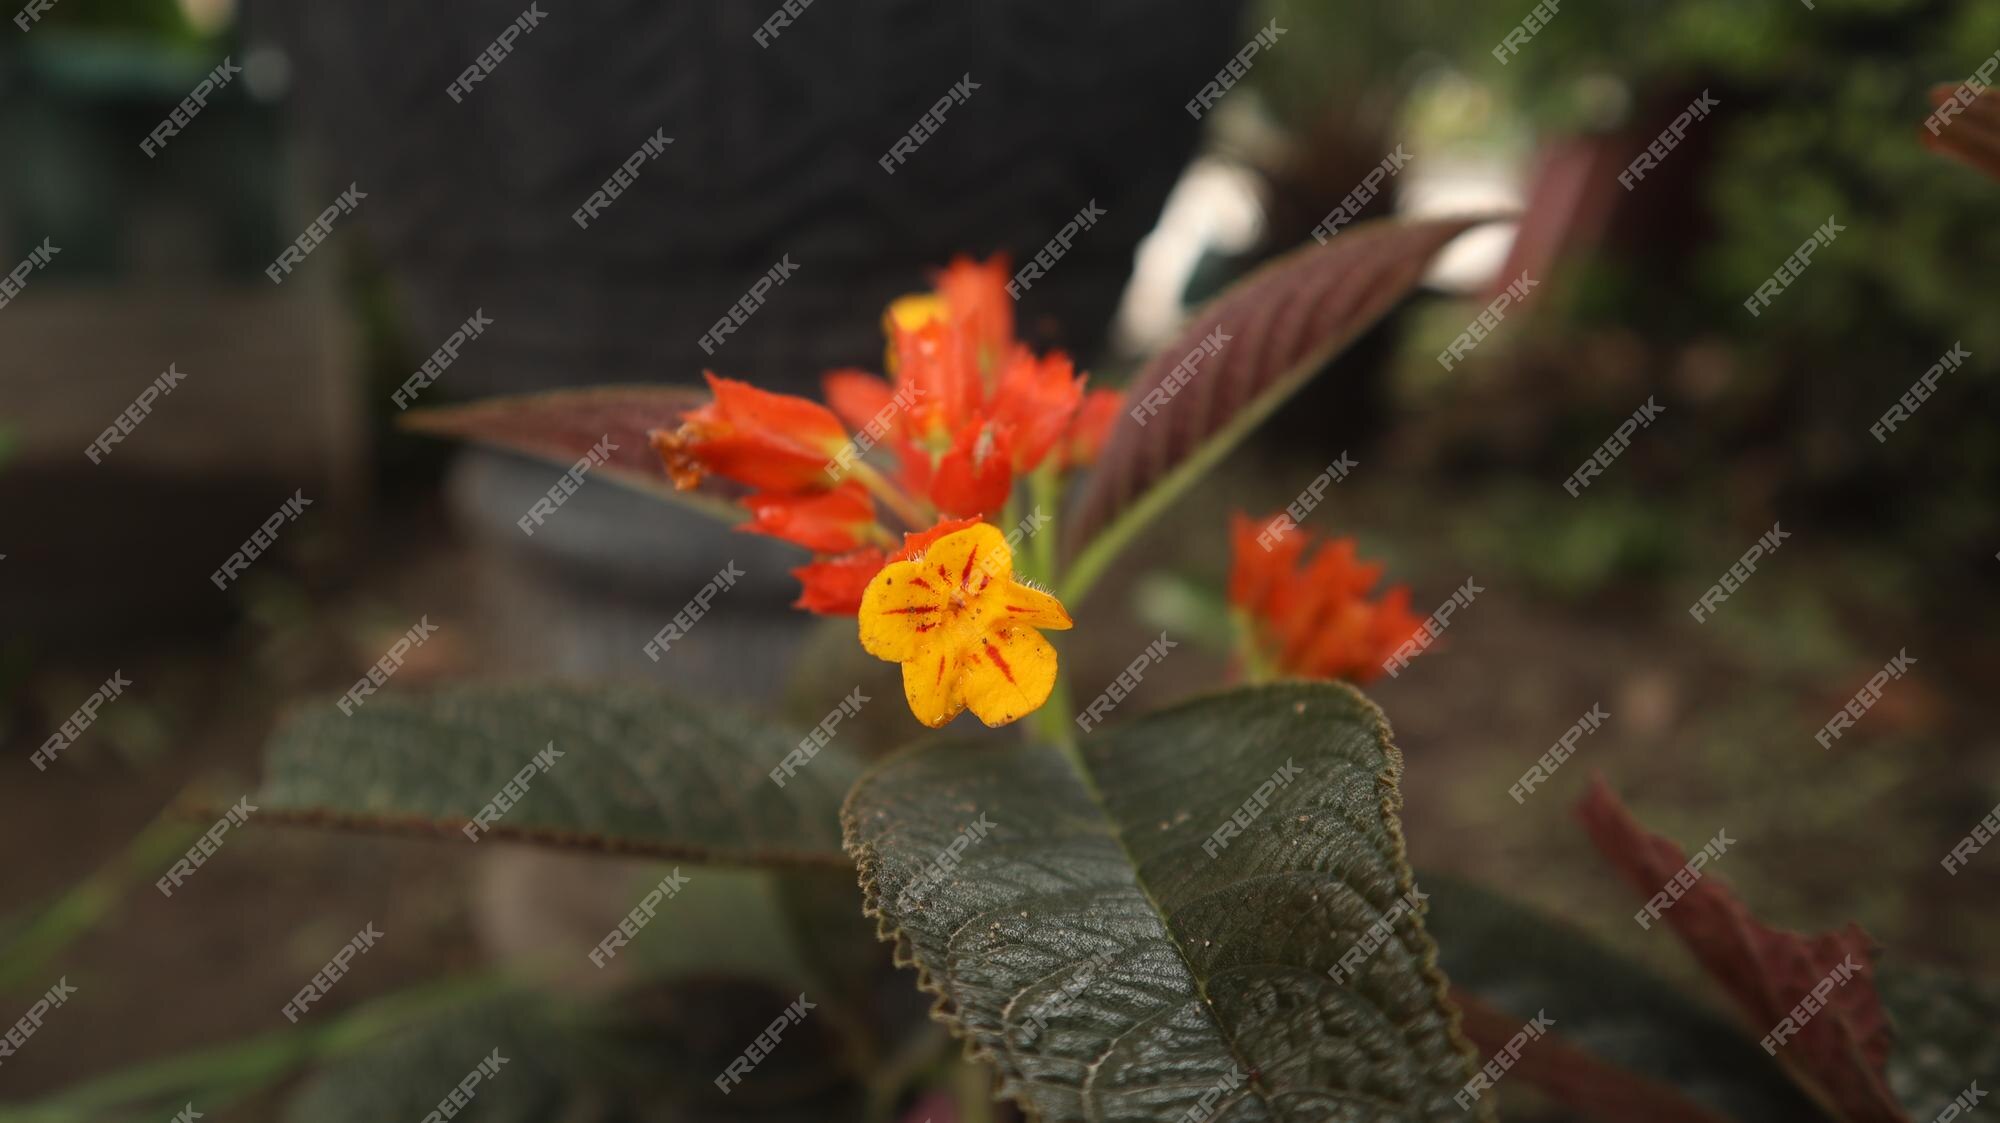 Planta alloplectus, riden sunset, begonia negra, chrysothemis pulchella,  hoja de cobre, campanas al atardecer. | Foto Premium